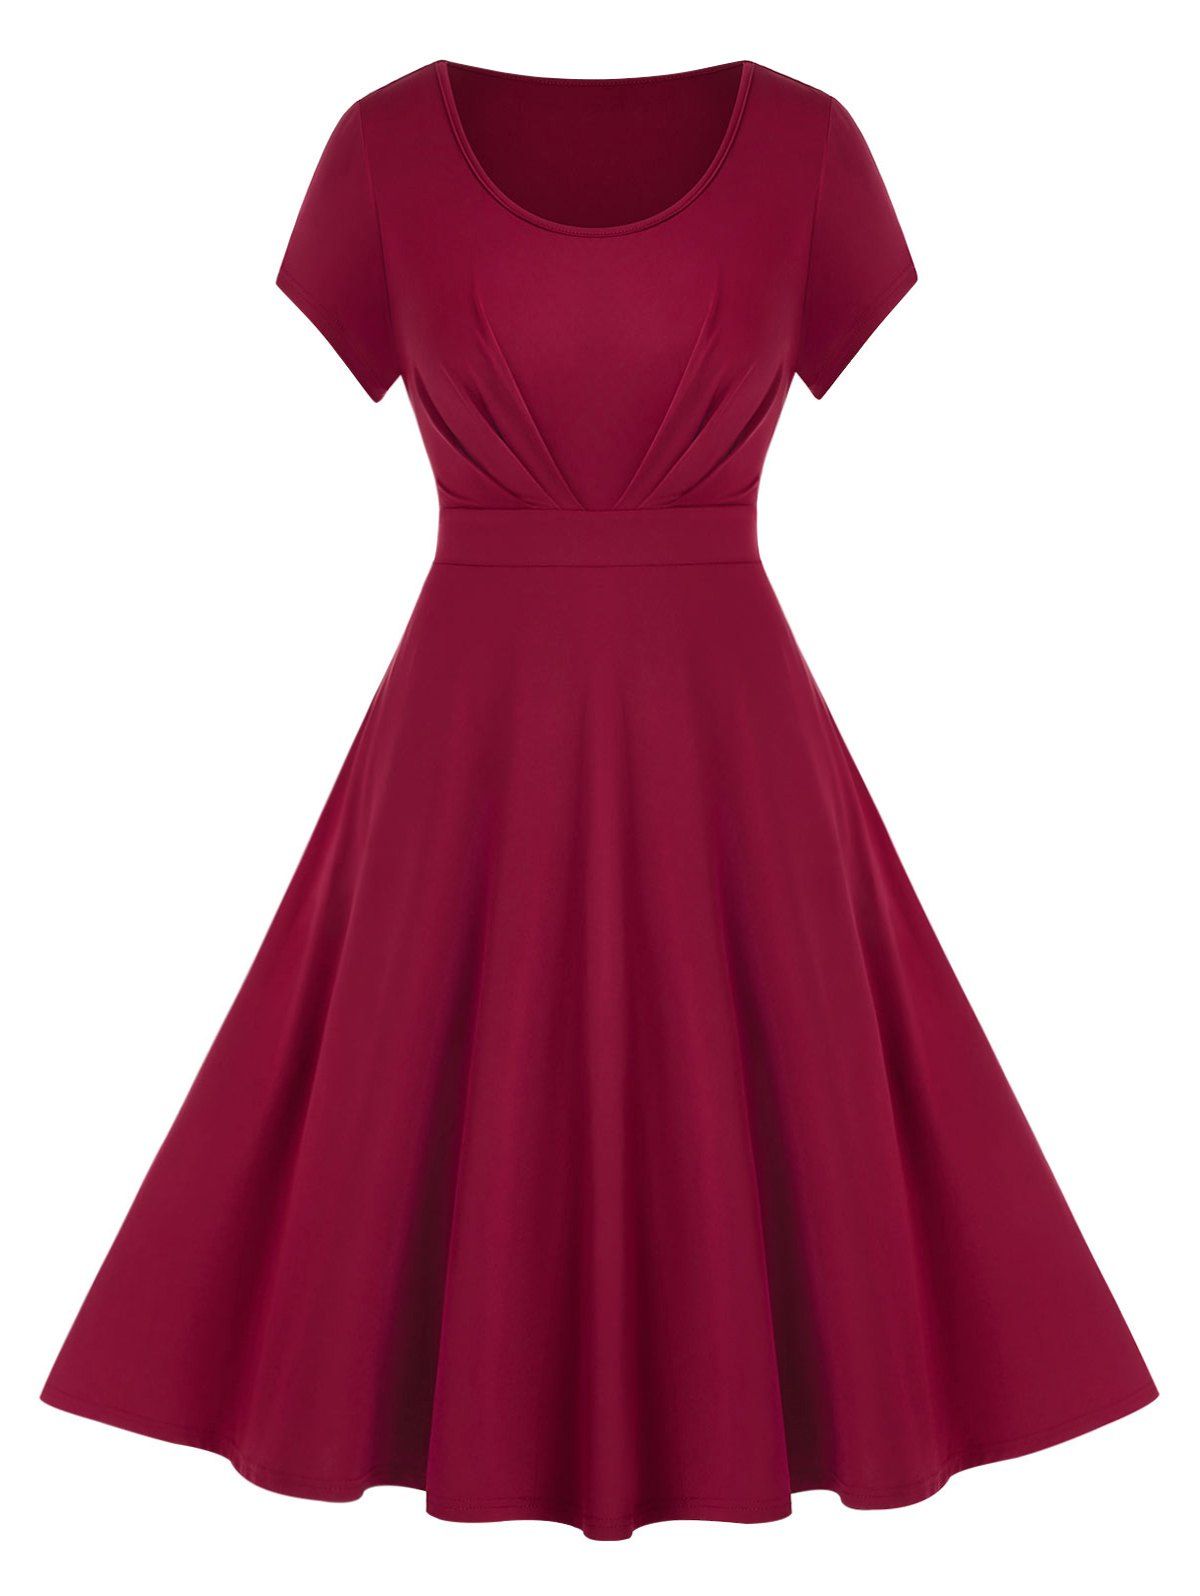 Plus Size Round Collar A Line Dress - RED WINE L